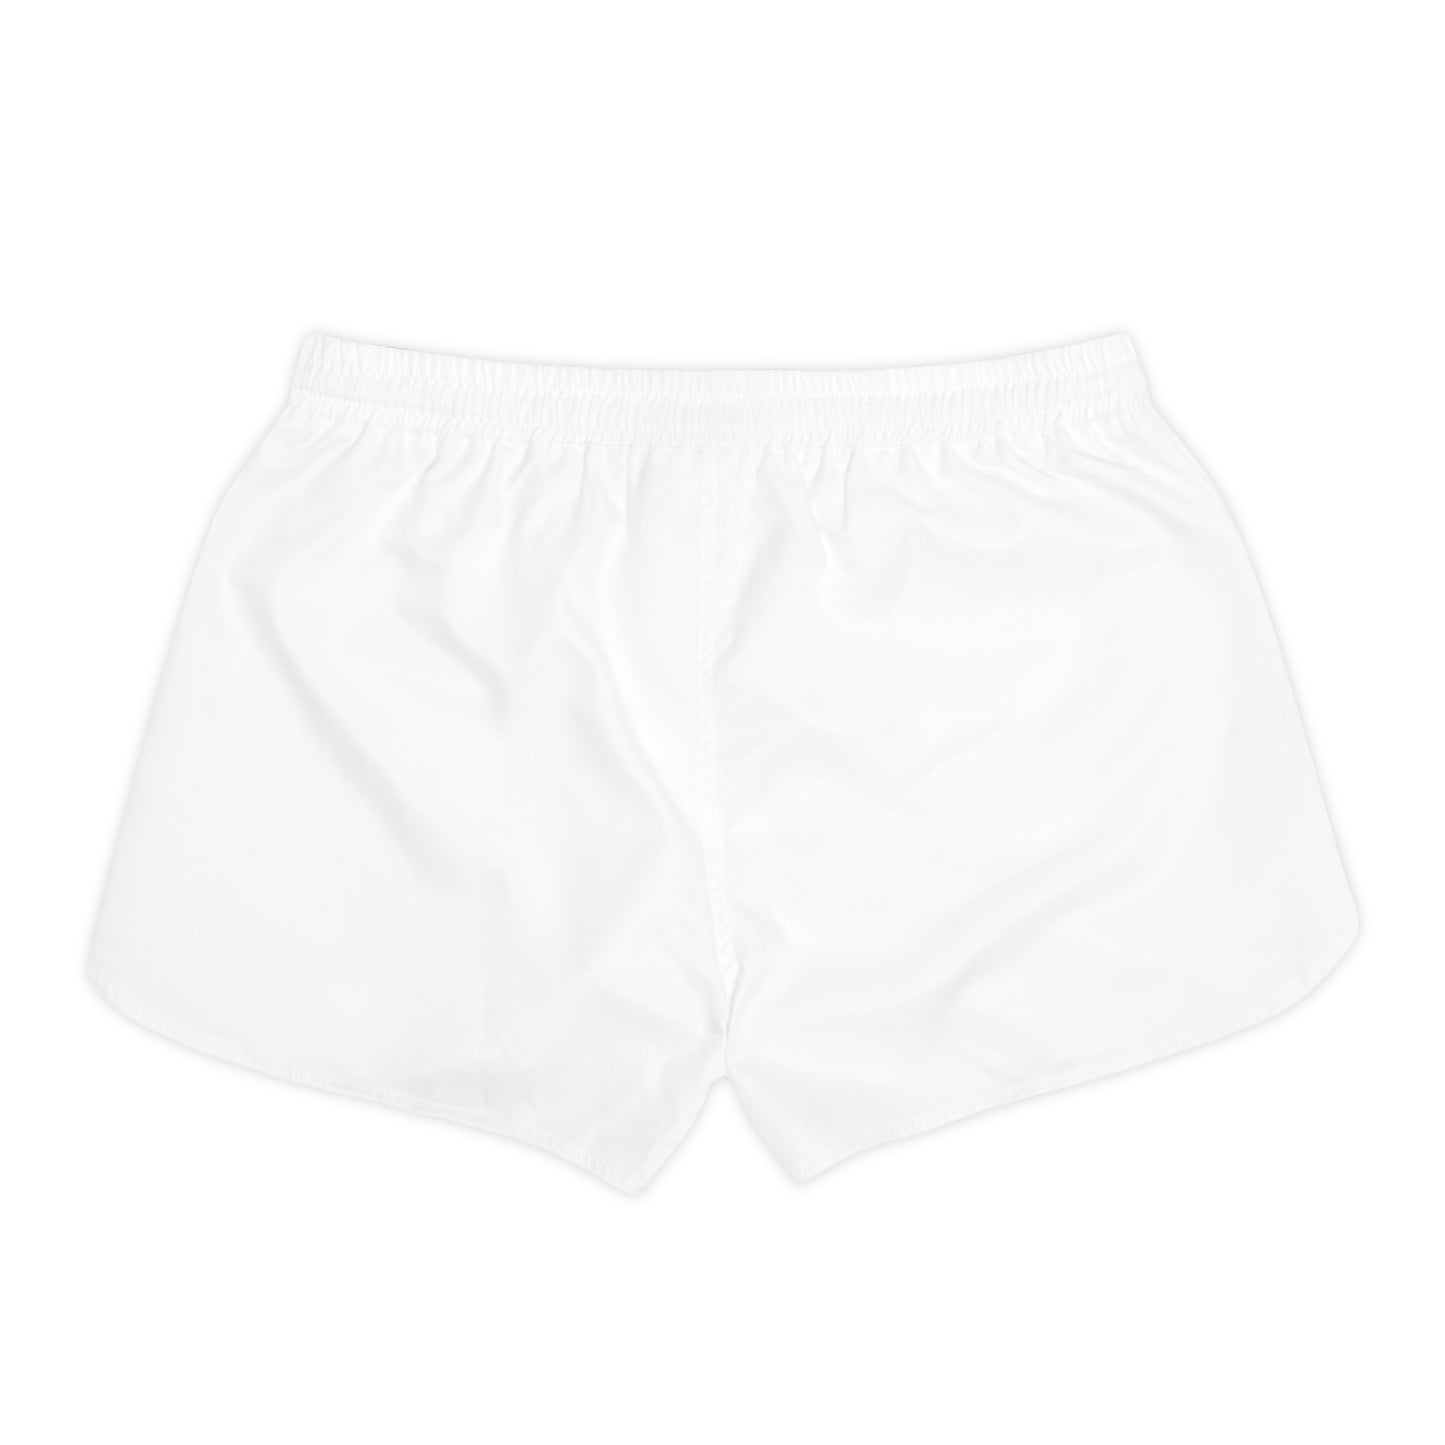 Women's FTF Shorts White/Red